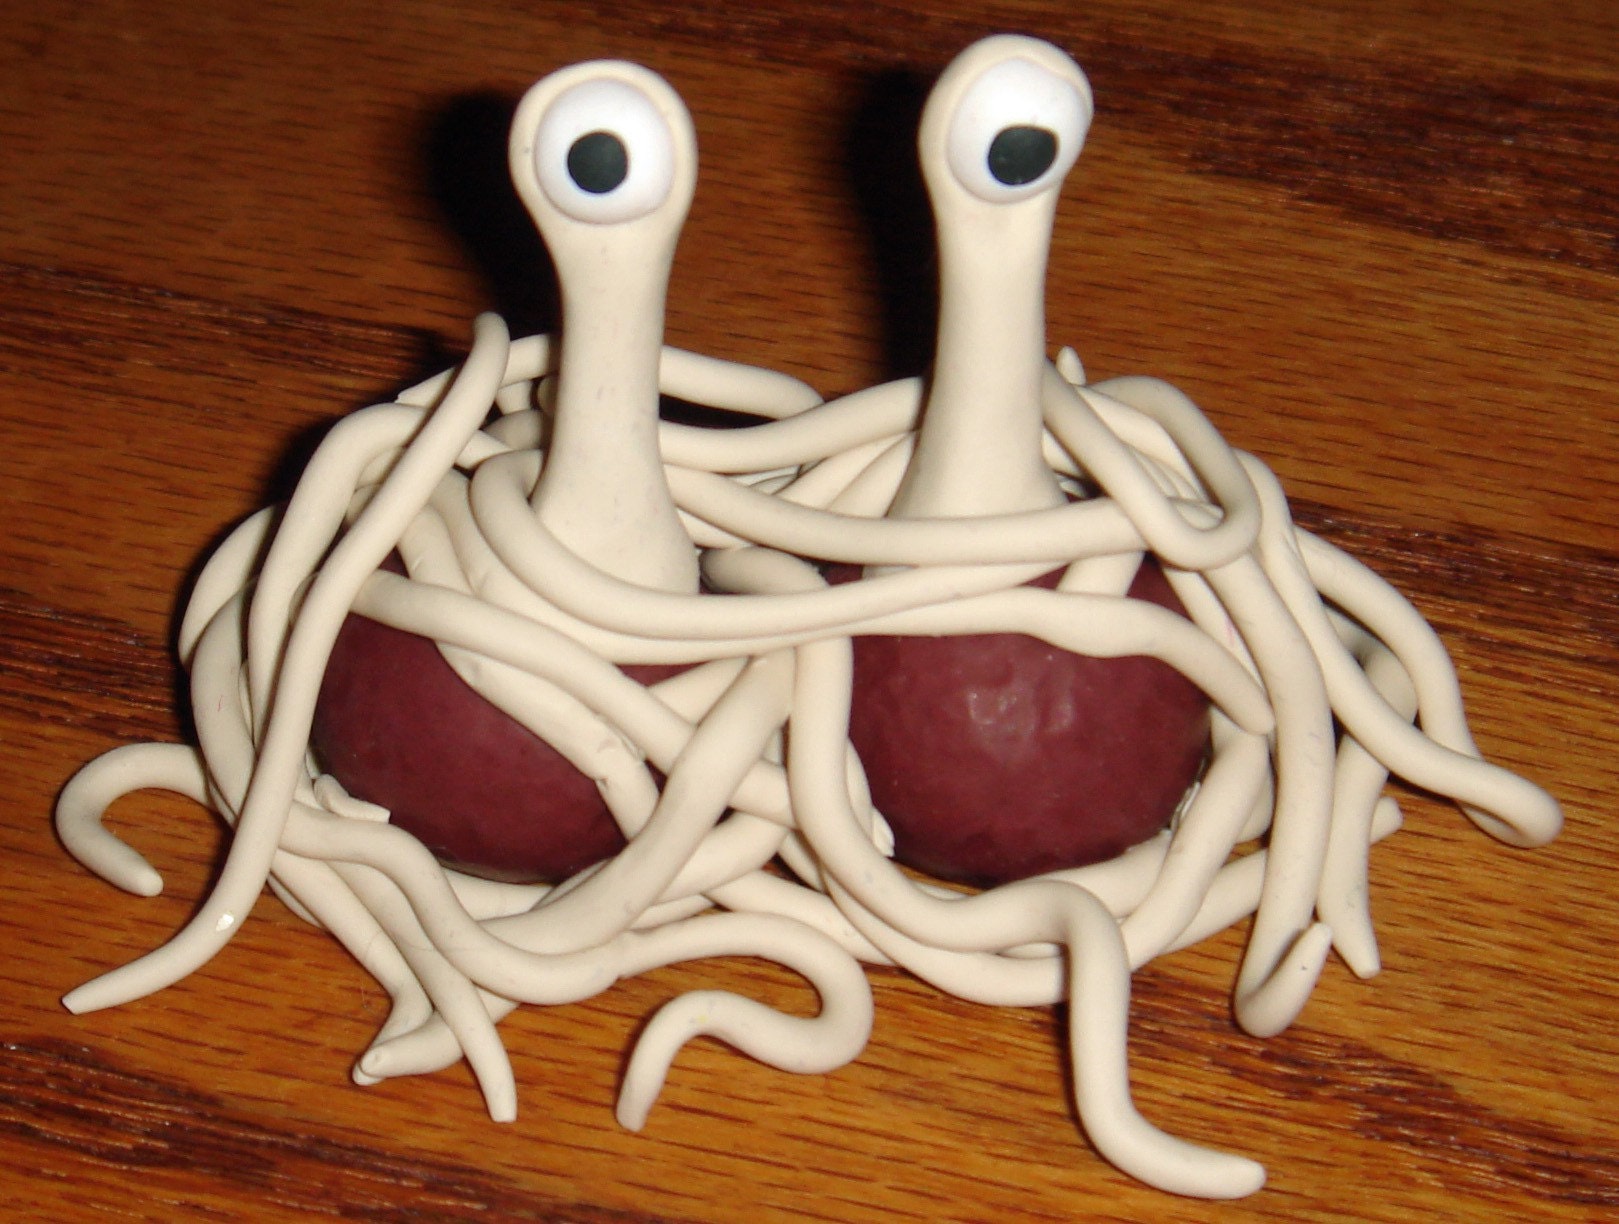 The Flying Spaghetti Monster Figurine